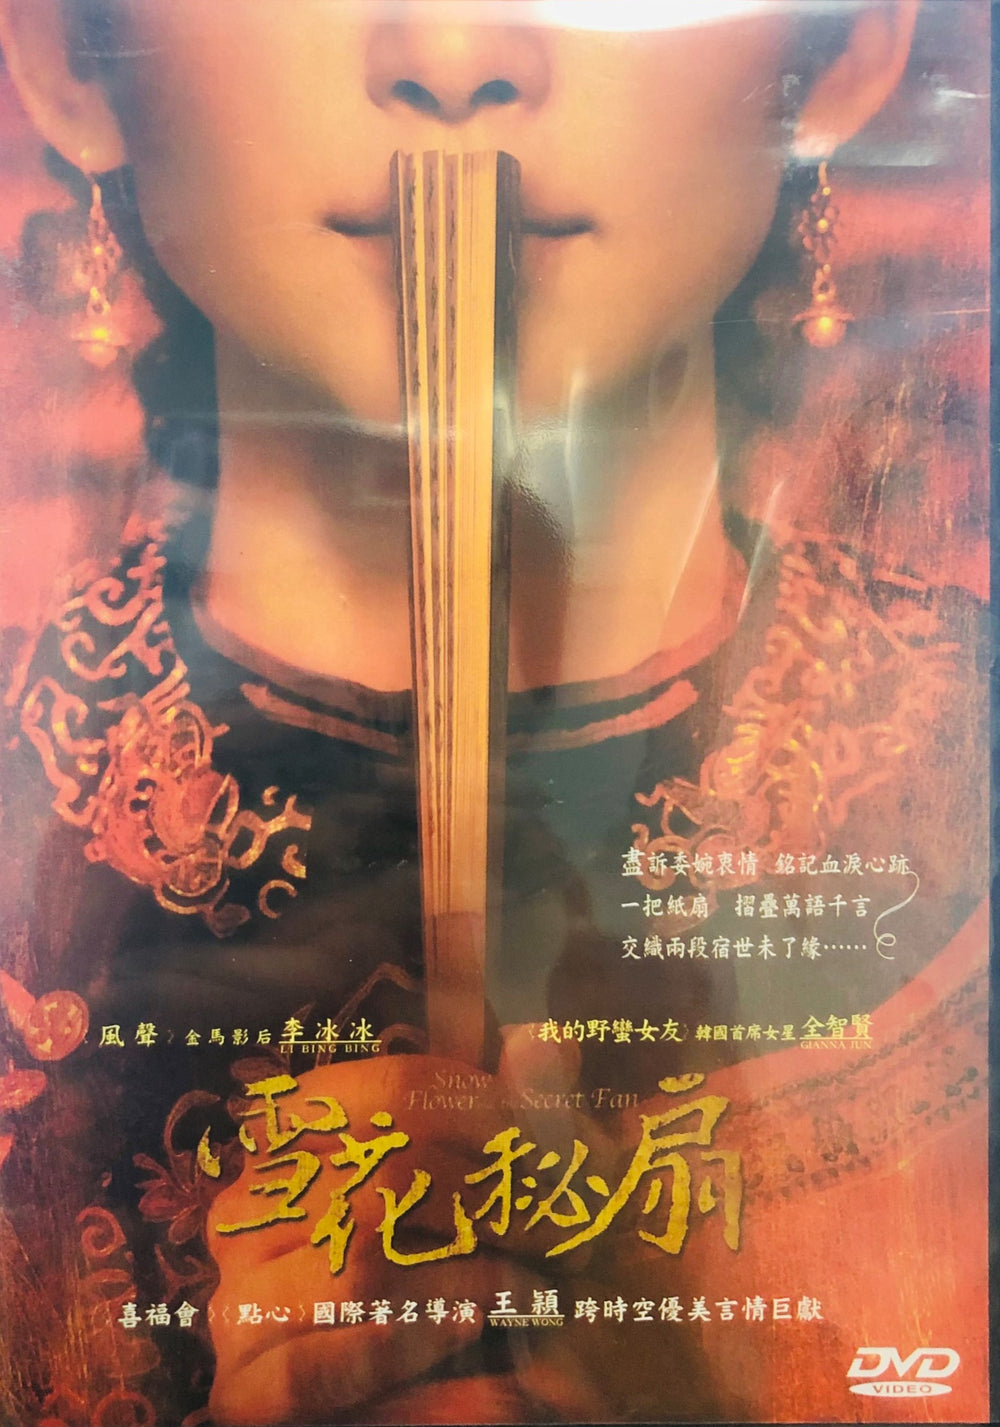 Snow Flower And The Secret Fan 雪花秘扇 2011 (Mandarin Movie) DVD ENGLISH SUB (REGION 3)